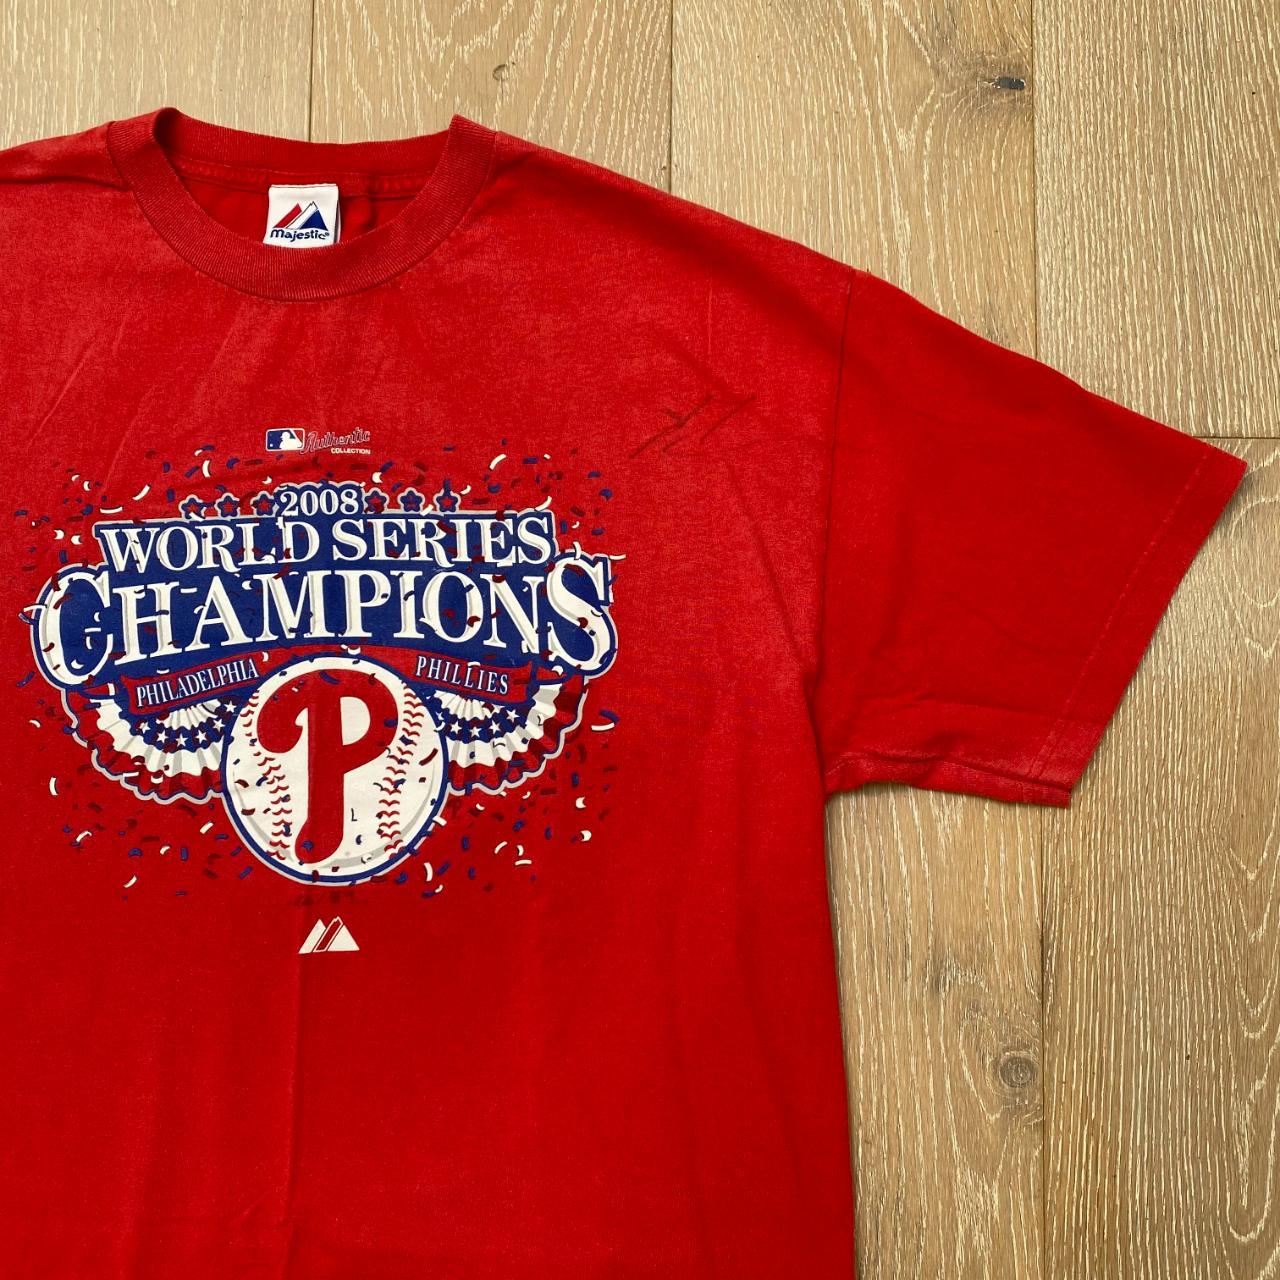 Majestic PHILADELPHIA PHILLIES 2008 WORLD SERIES CHAMPIONS T-shirt